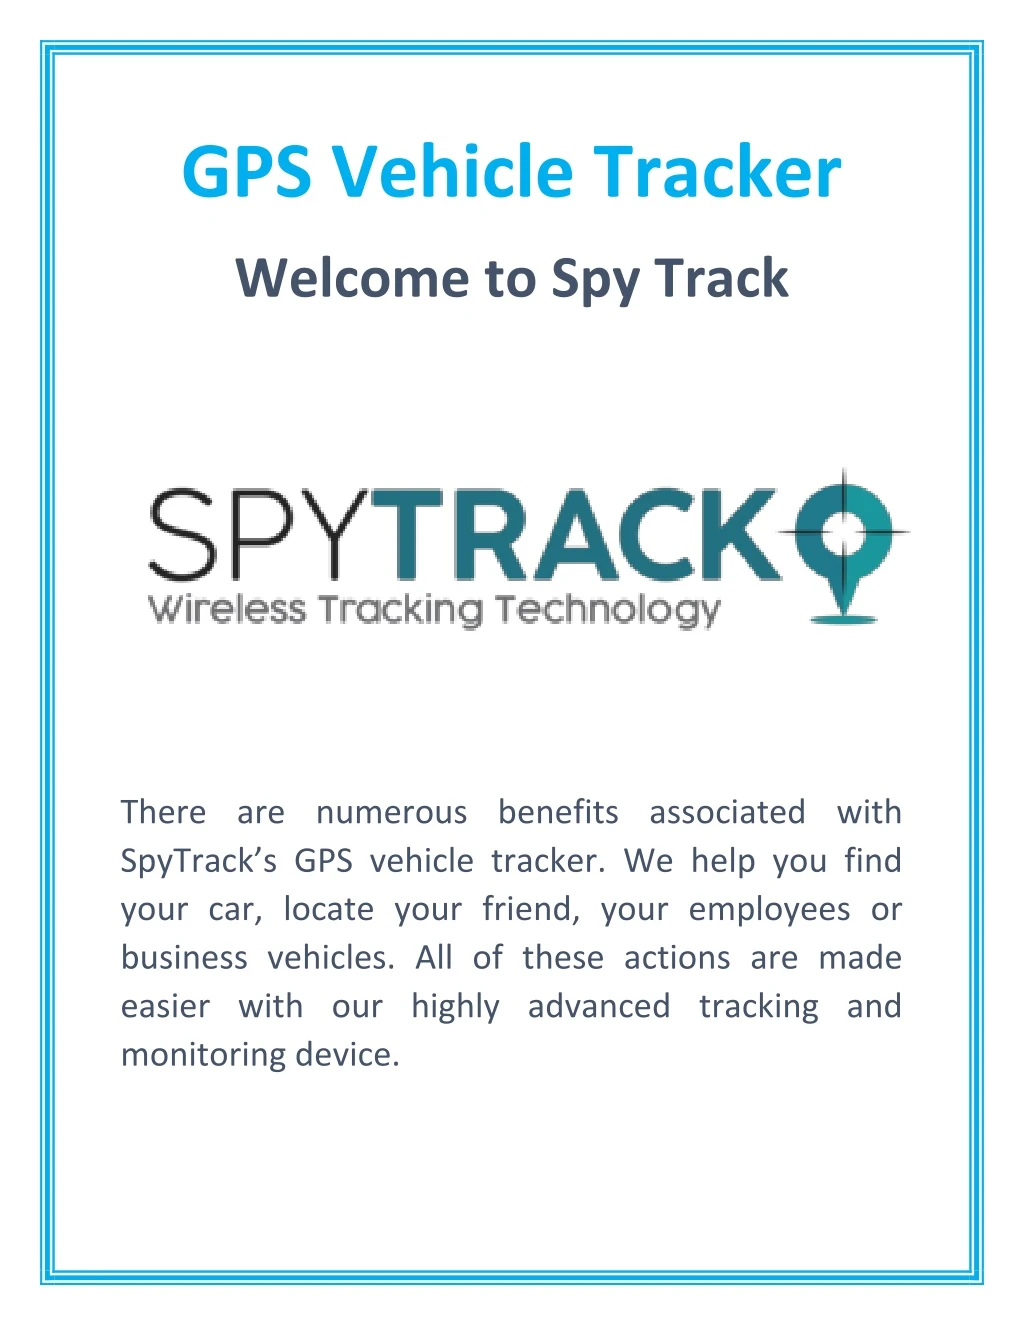 gps vehicle tracker